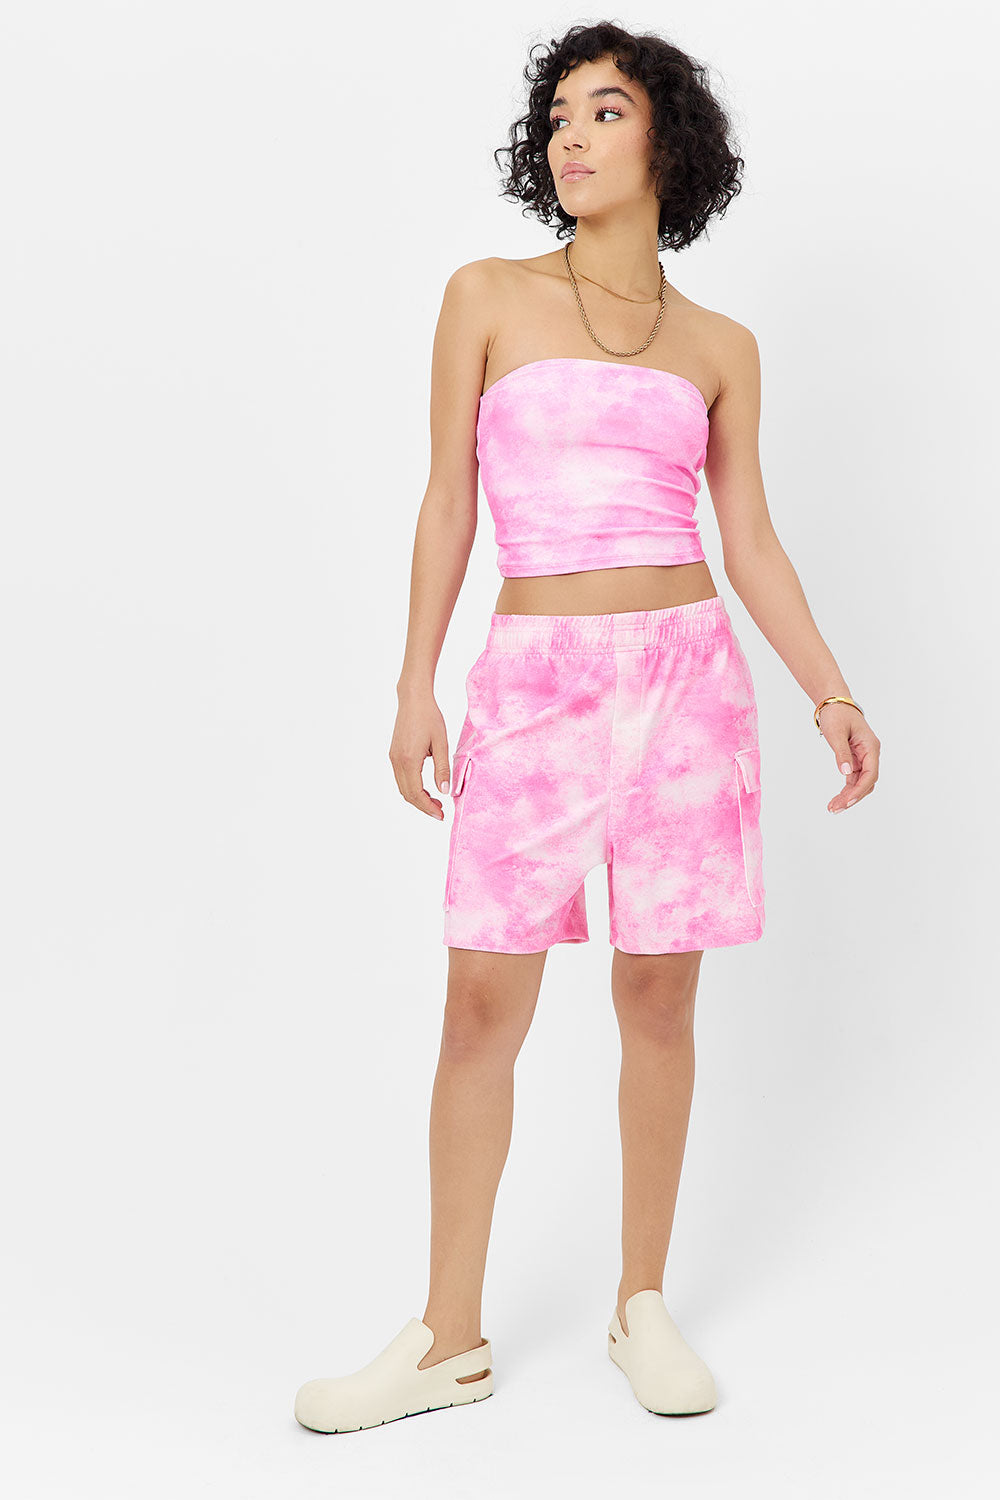 Peace Terry Strapless Bikini Top - Distorted Pink Dye